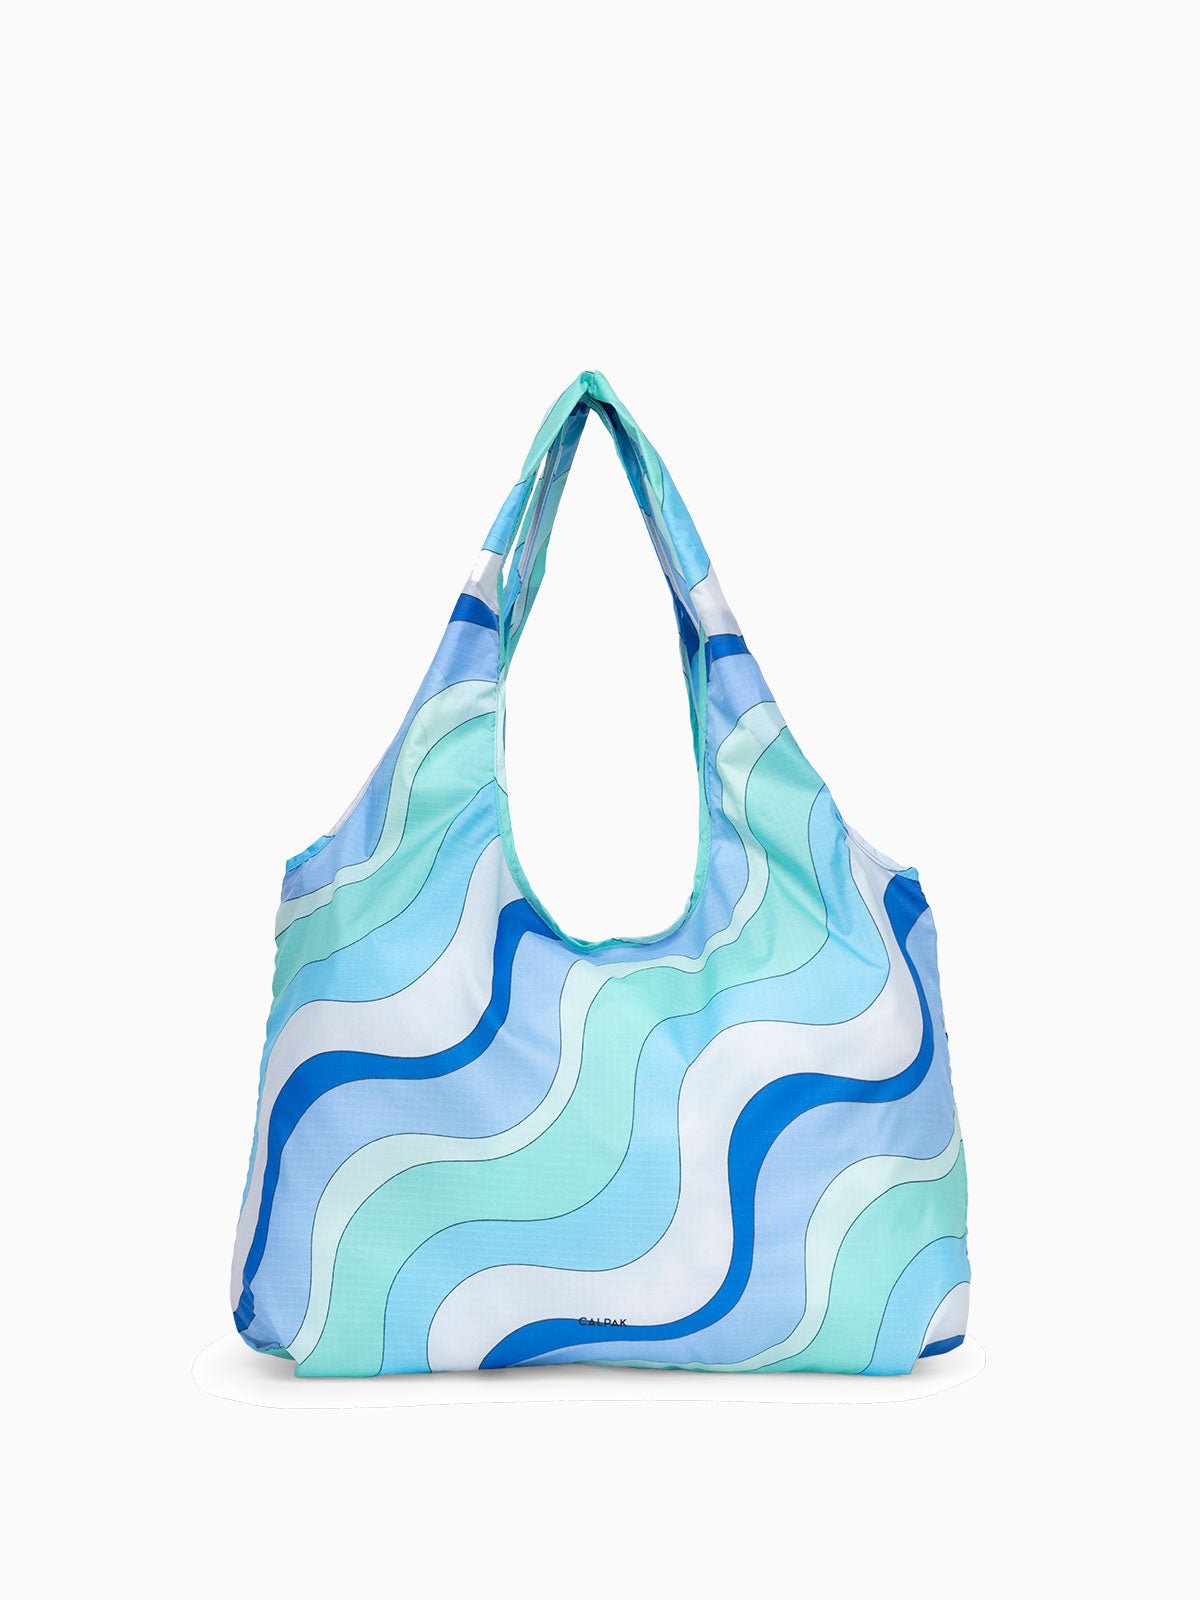 CALPAK compakt tote bag in wavy blue pattern